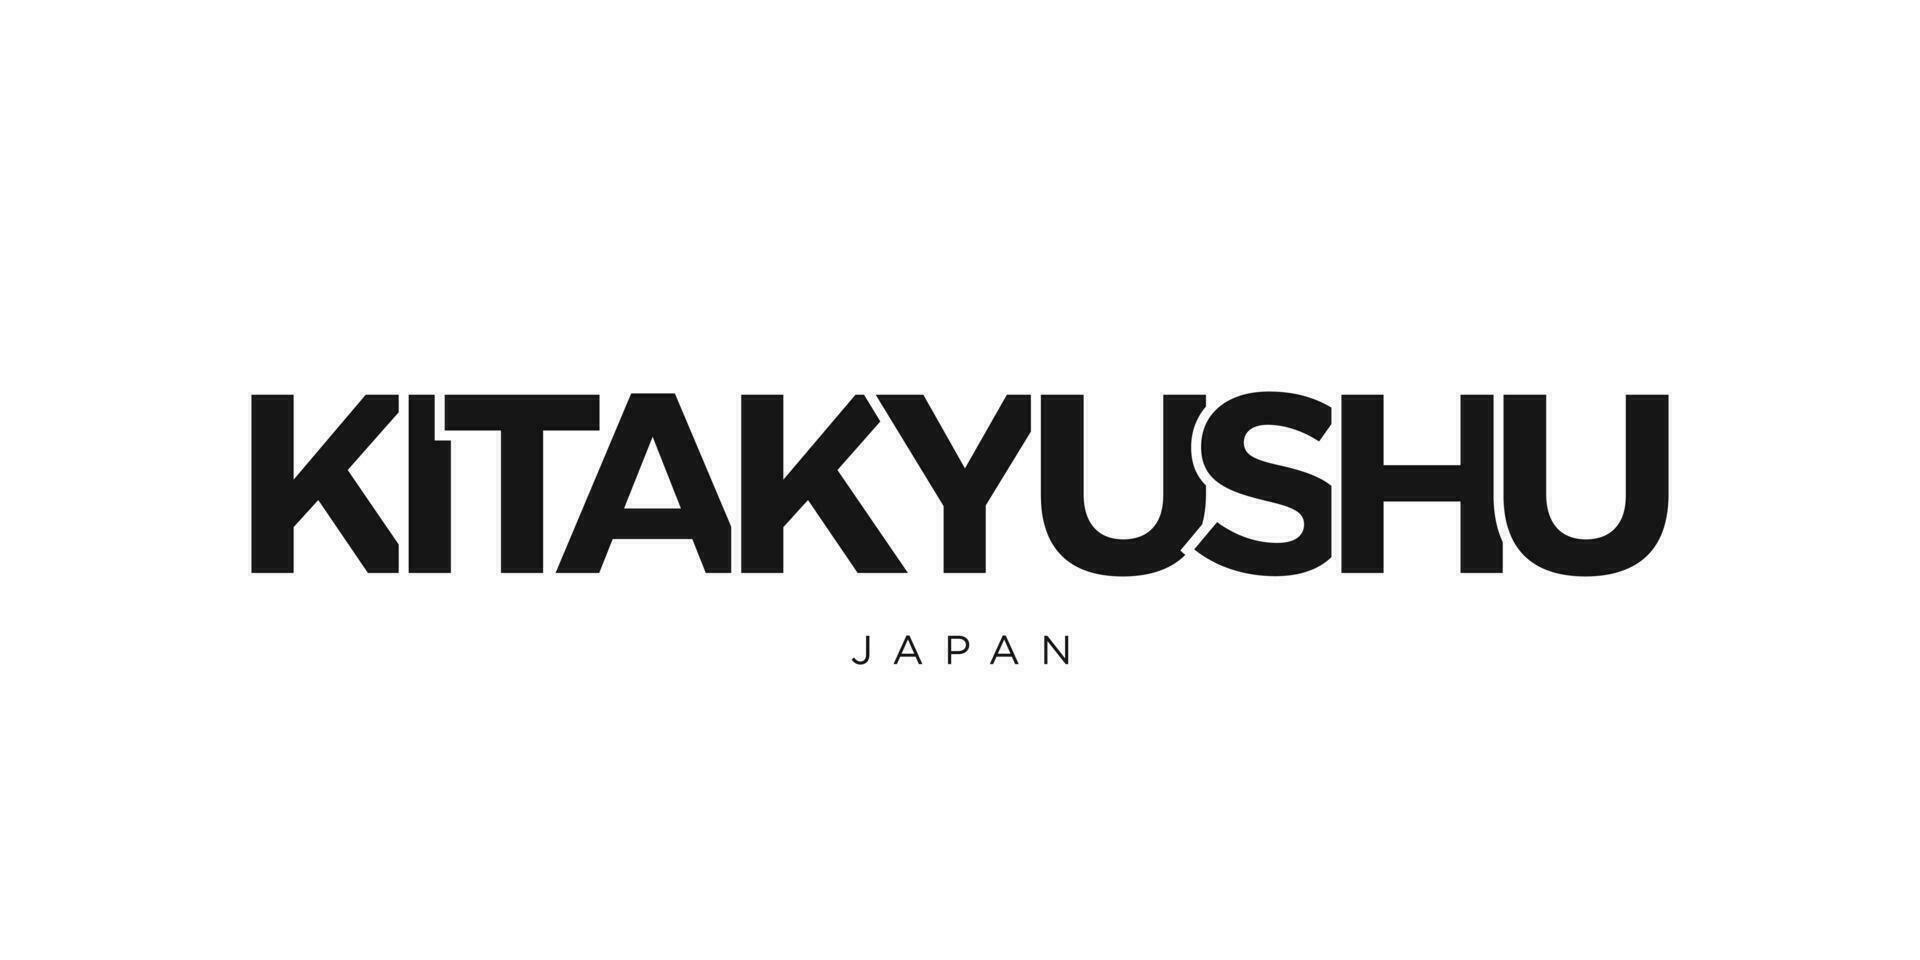 kitakyushu i de japan emblem. de design funktioner en geometrisk stil, vektor illustration med djärv typografi i en modern font. de grafisk slogan text.